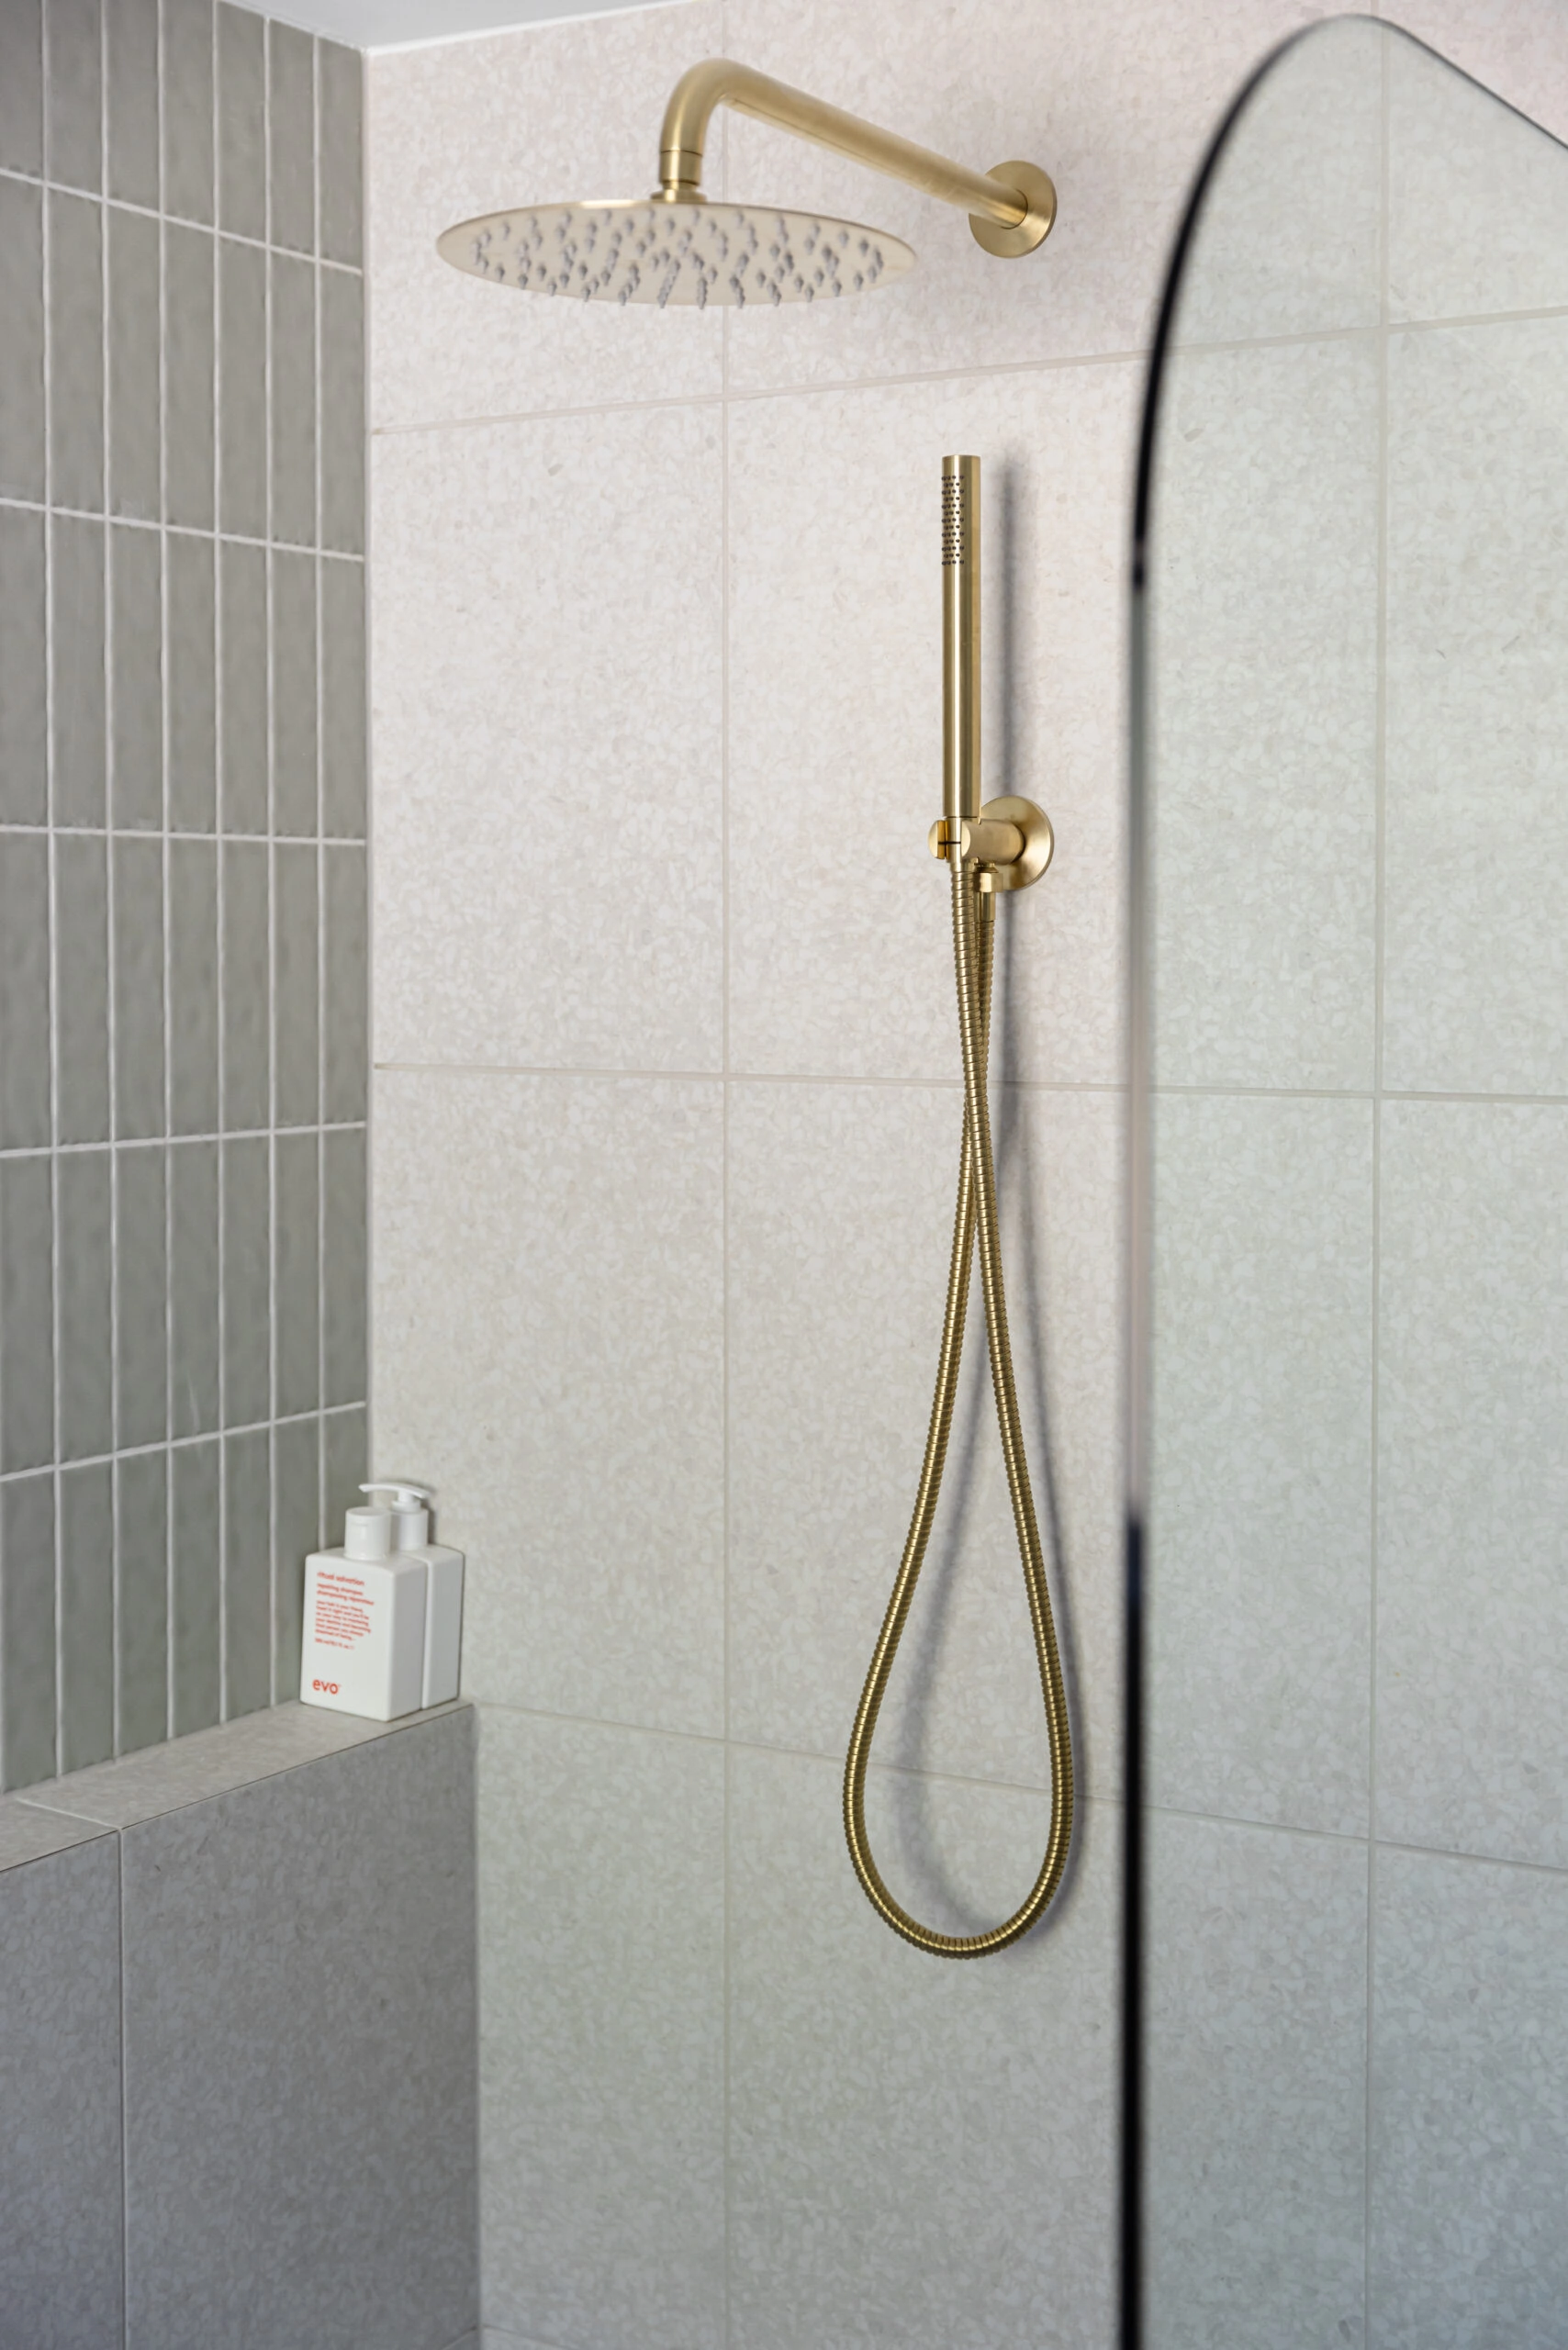 Gold shower accents on light bathroom tiles